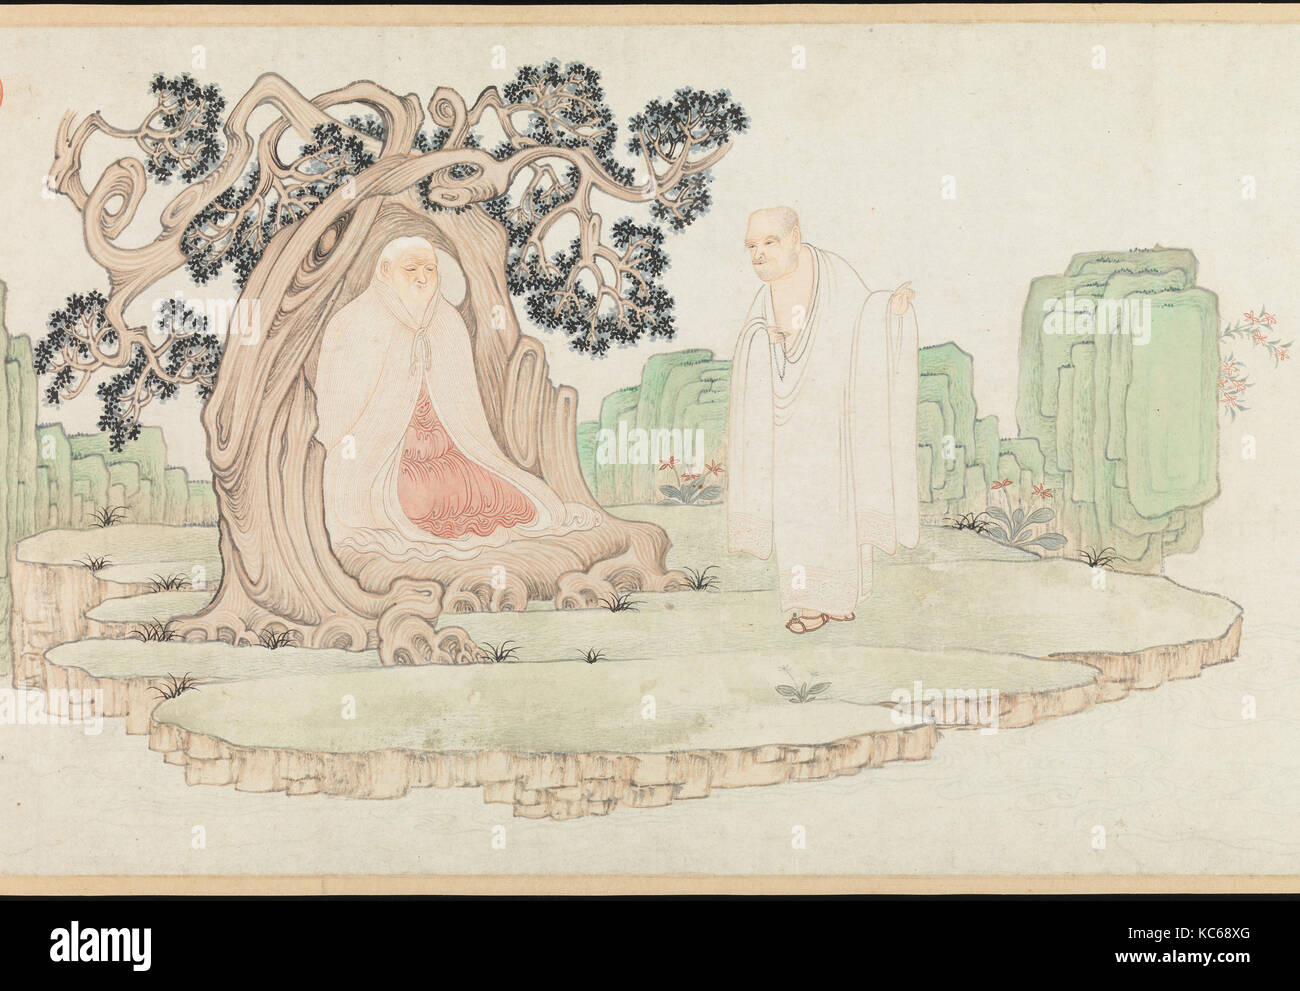 明 吳彬 十六羅漢圖 卷, sedici Luohans, Wu Bin, datata 1591 Foto Stock